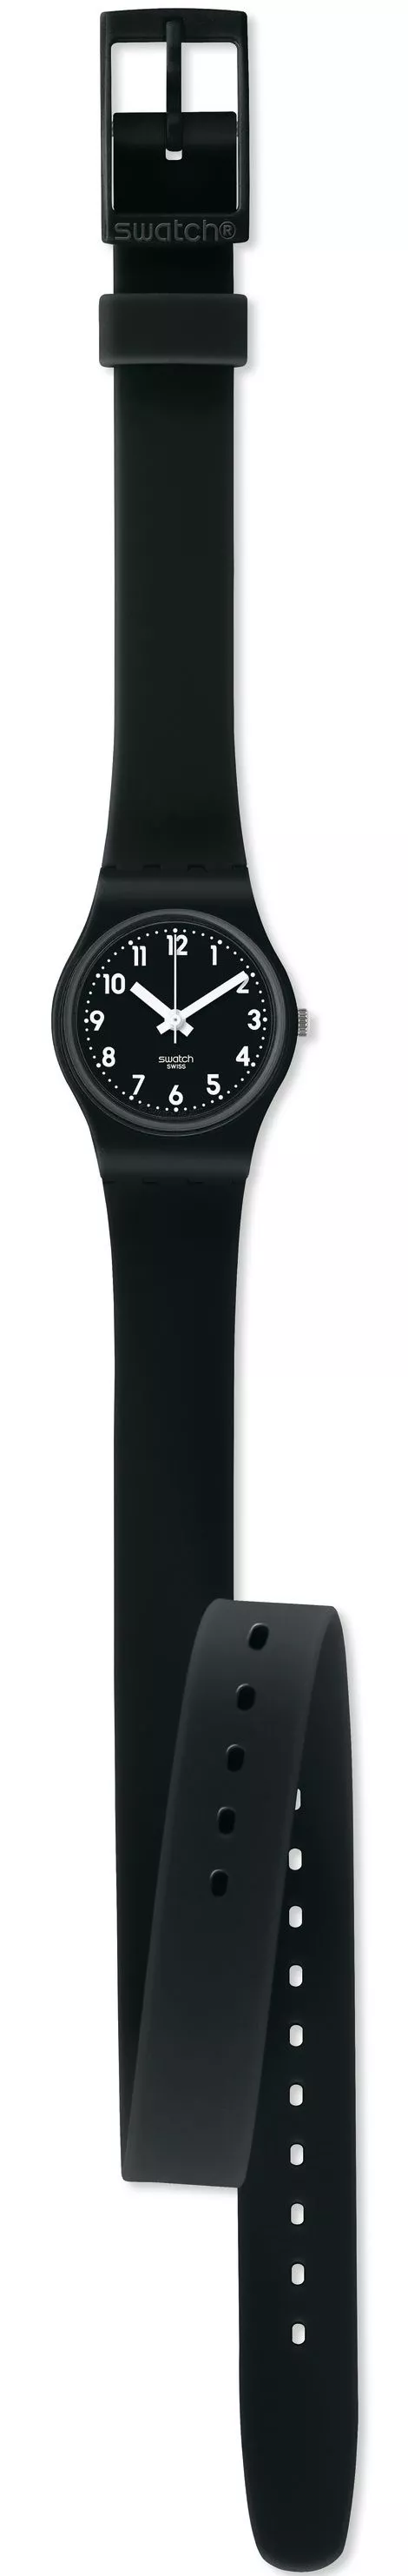 Zegarek Swatch Lady Black LB170